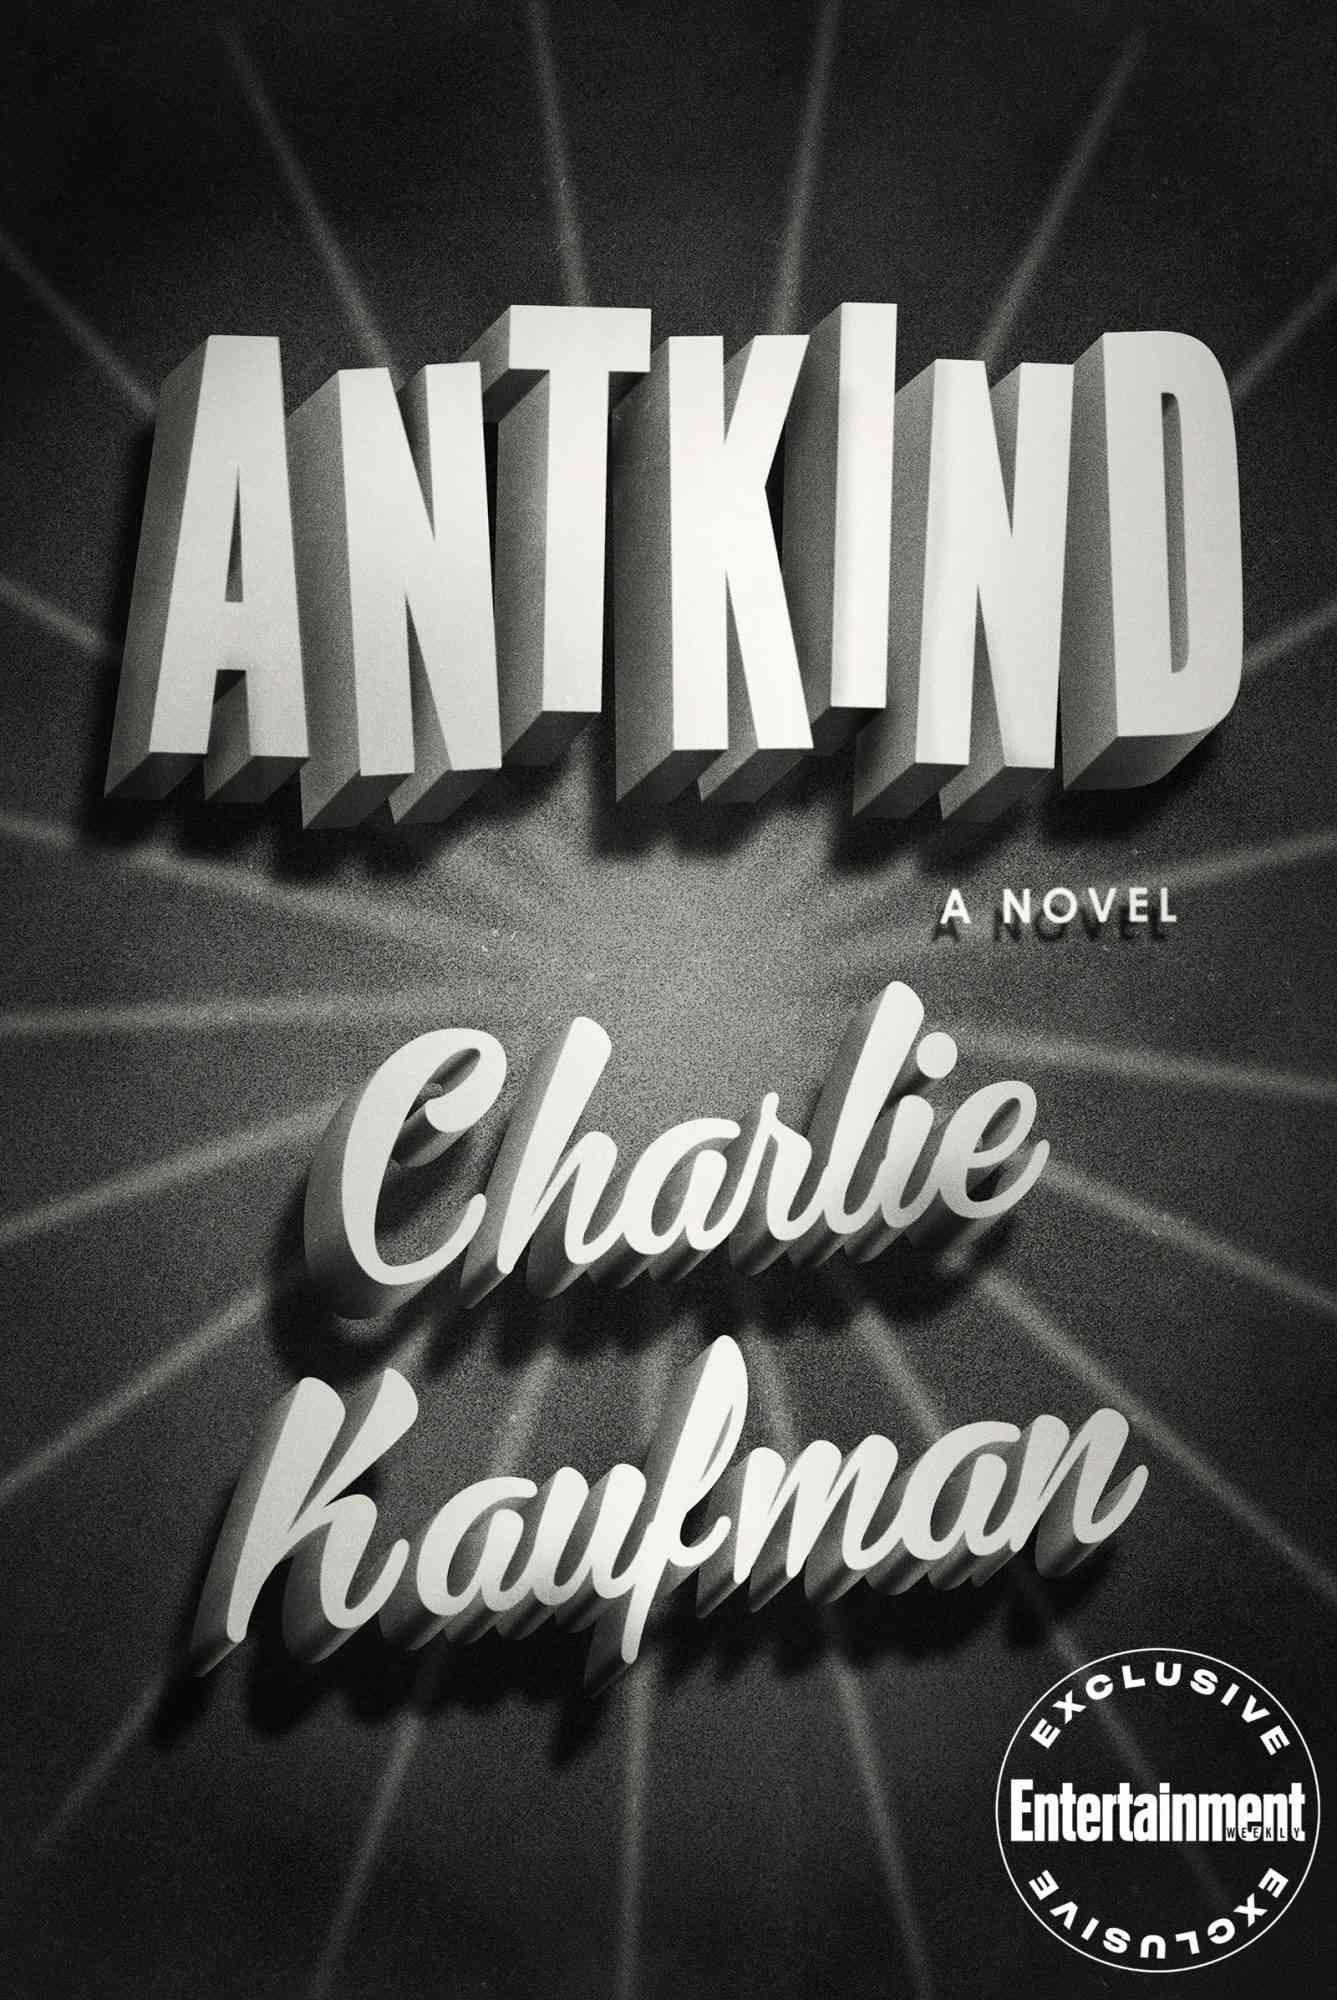 ANTKIND by Charlie Kaufman